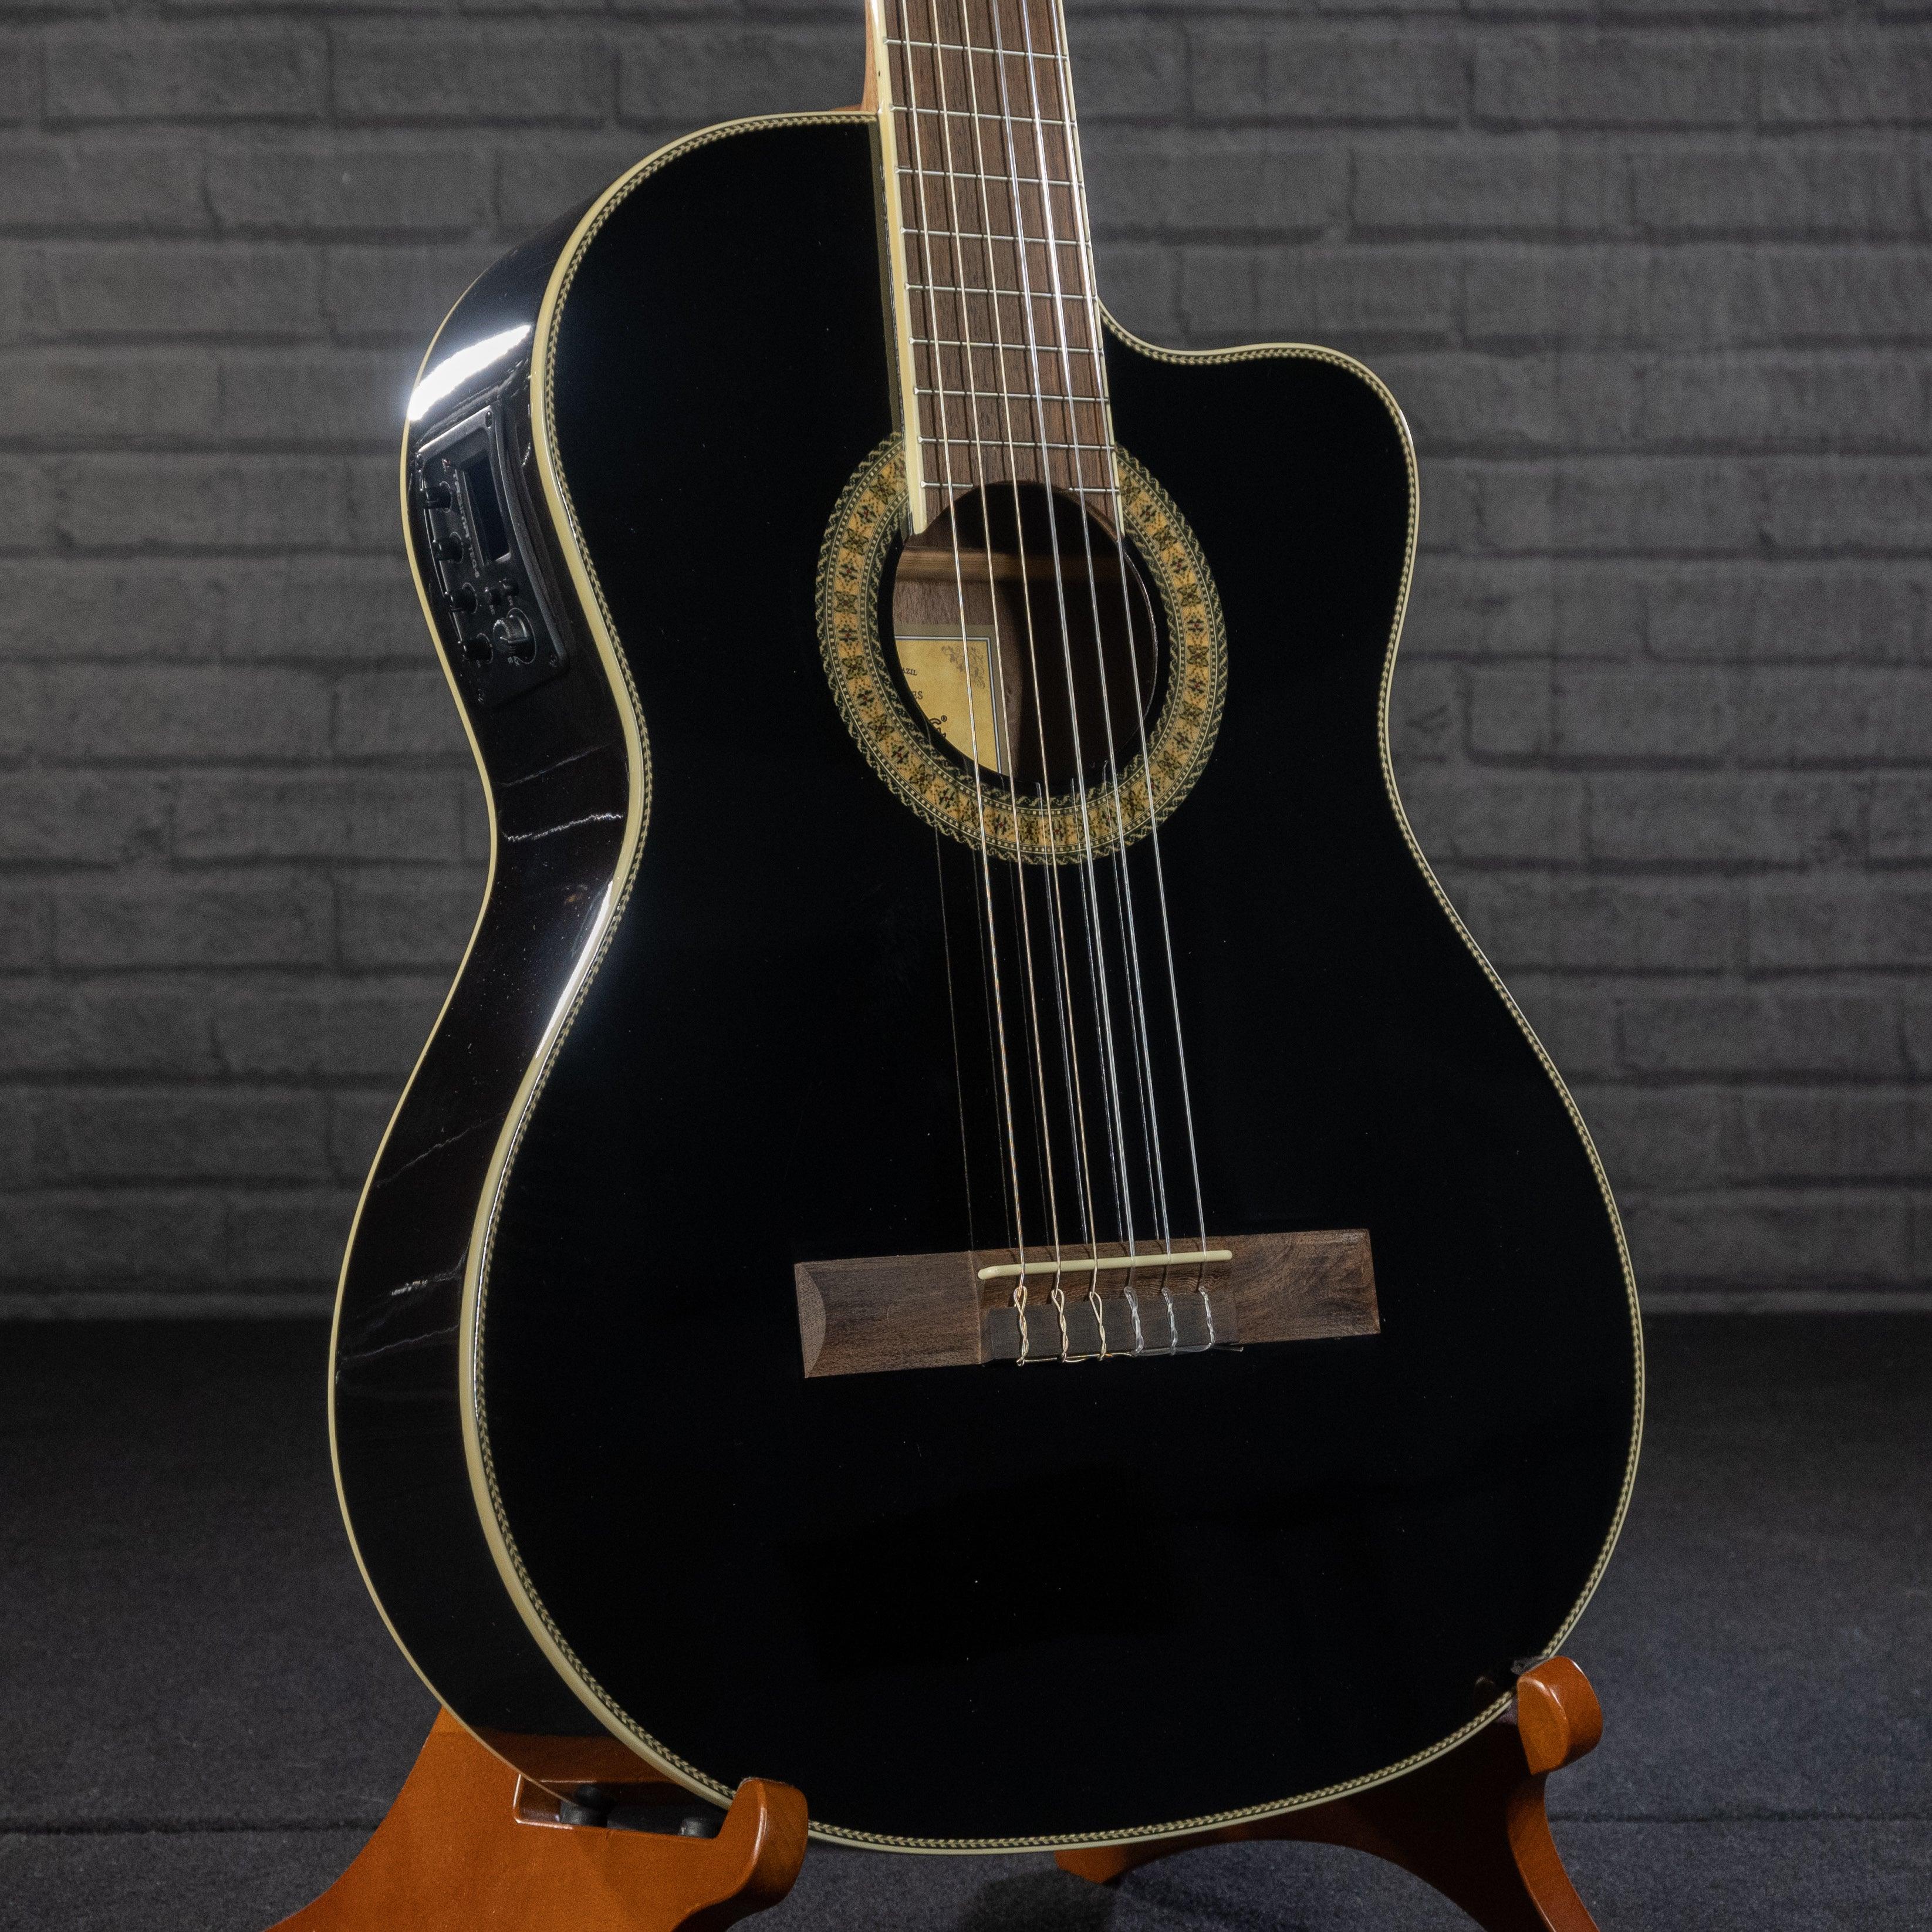 Tagima WS-10 EQ Classical Nylon Guitar (Black) - Impulse Music Co.